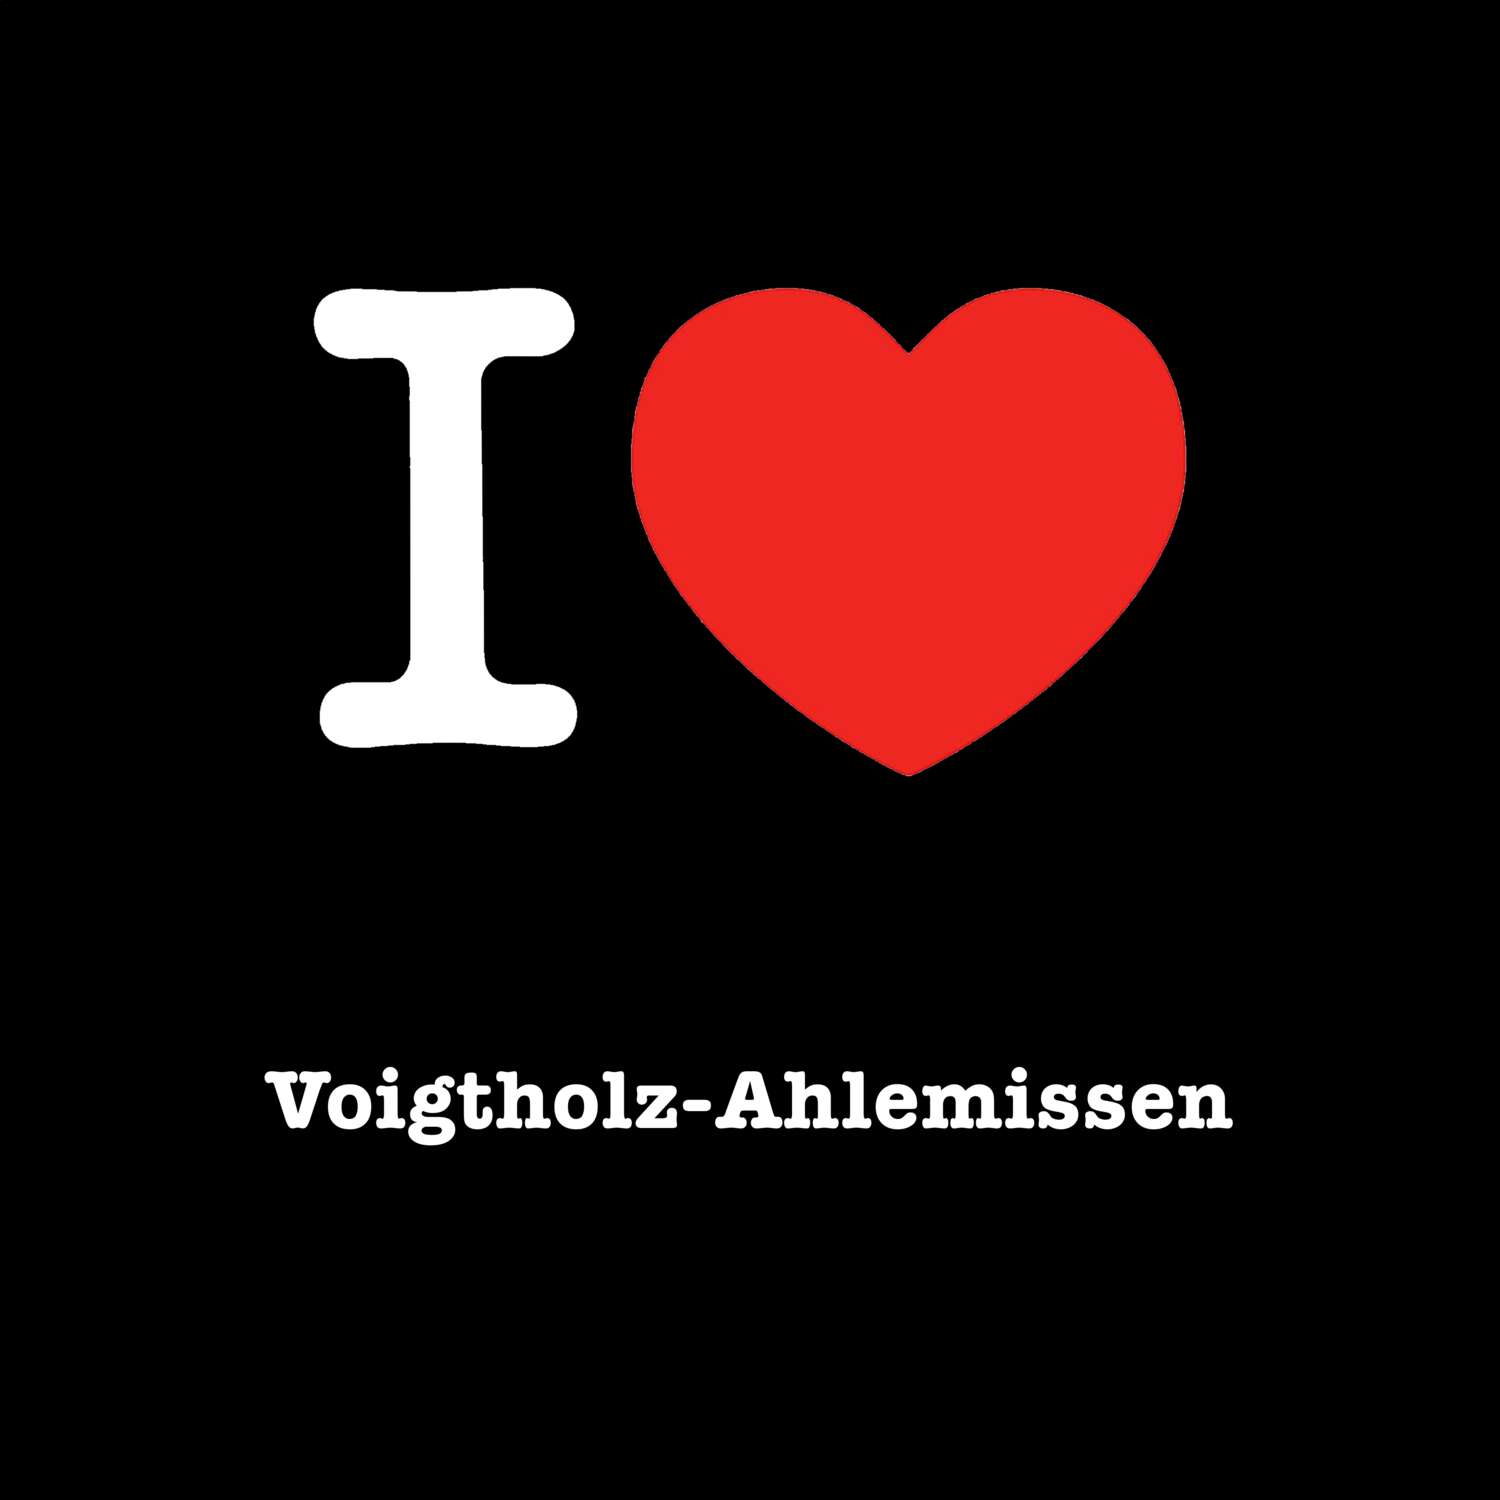 Voigtholz-Ahlemissen T-Shirt »I love«